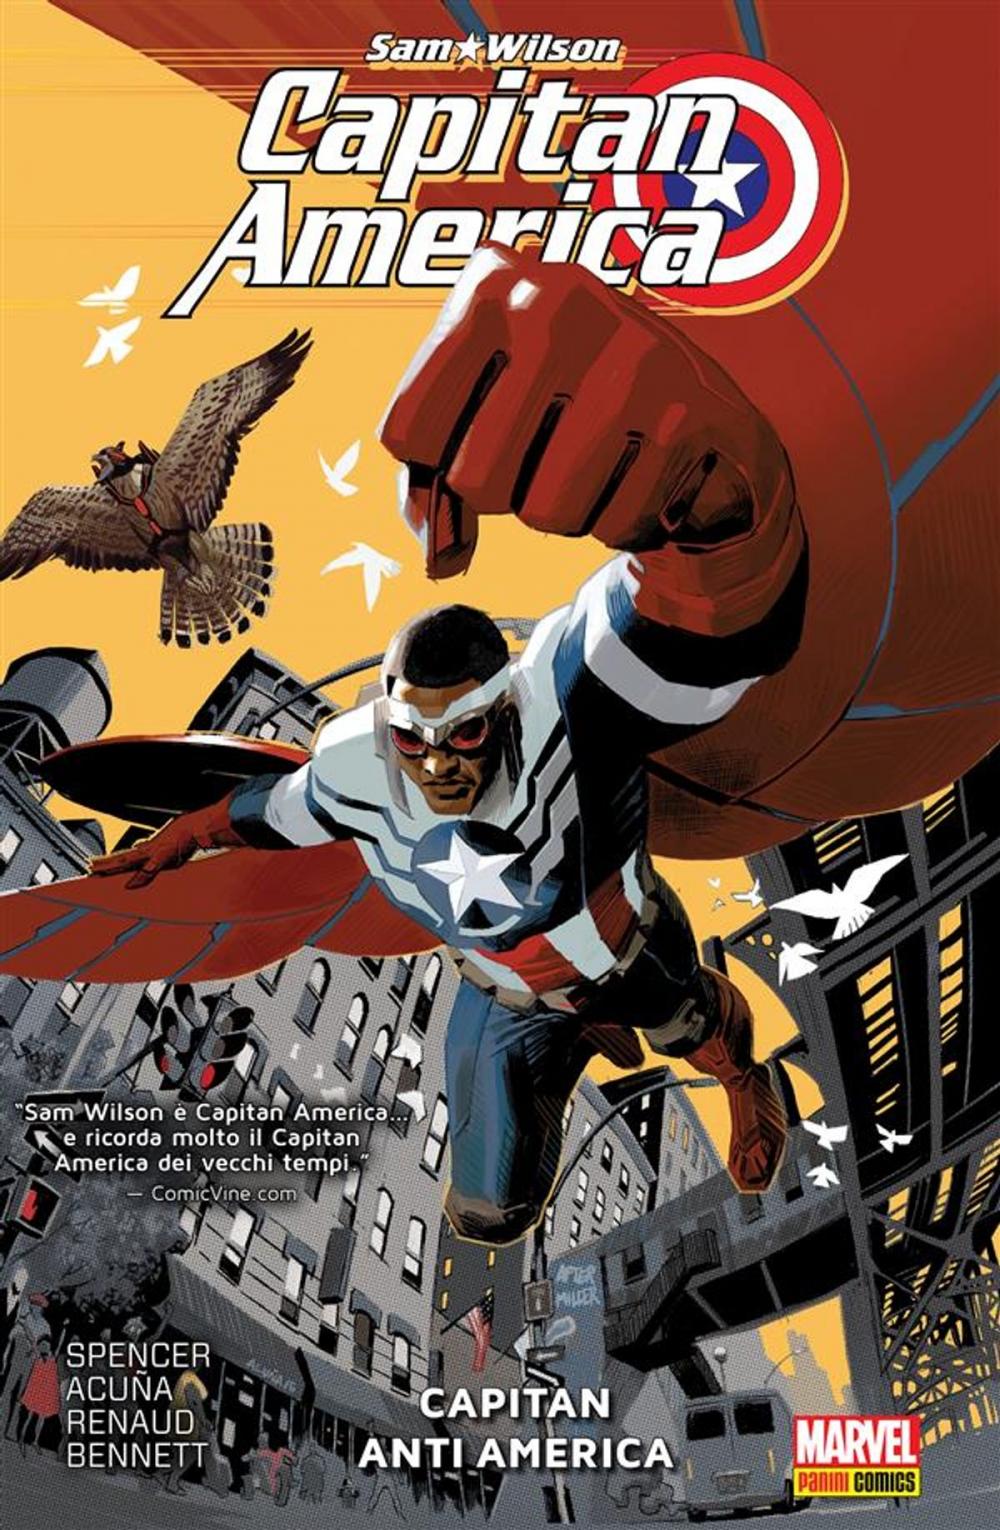 Big bigCover of Capitan America: Sam Wilson 1 (Marvel Collection)